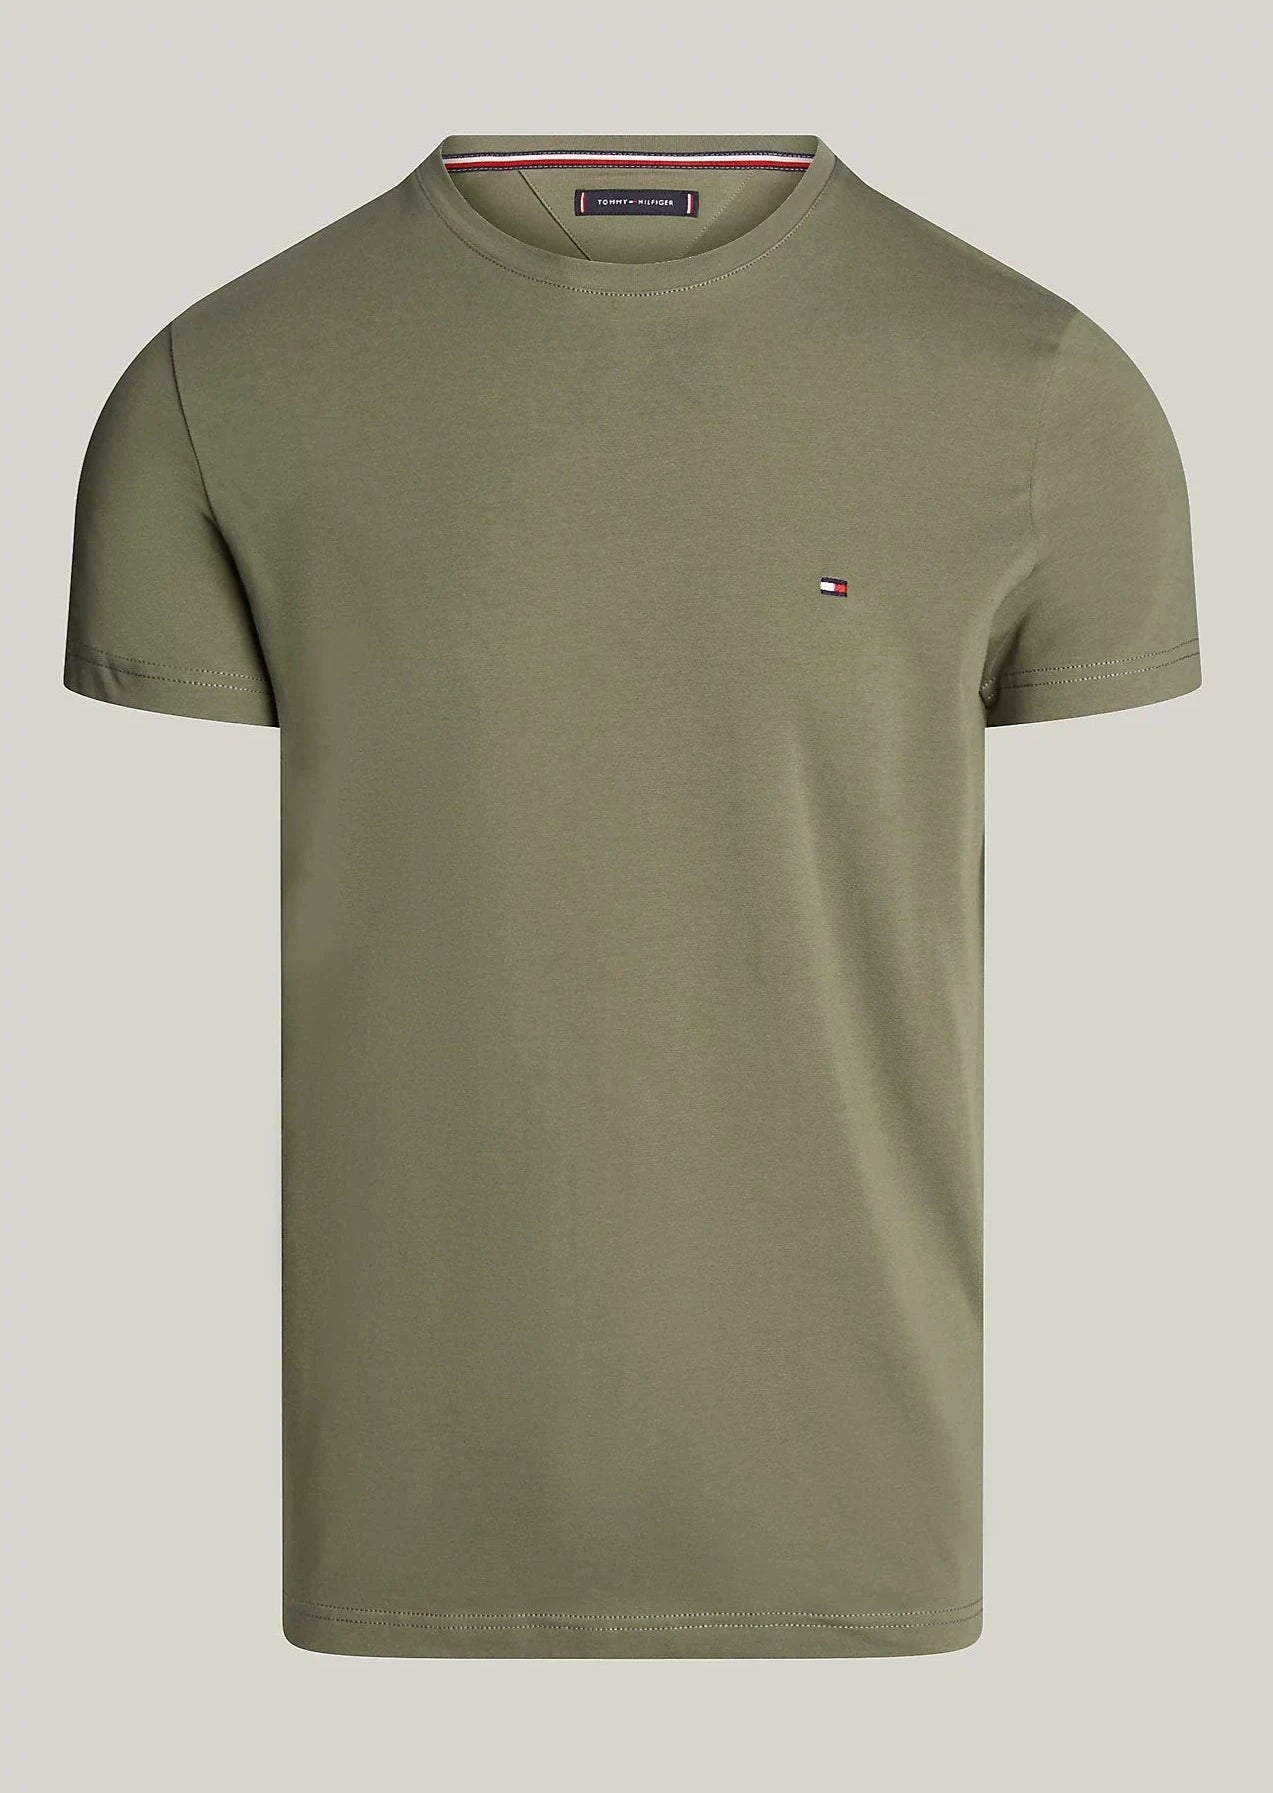 T-Shirt homme Tommy Hilfiger vert | Georgespaul